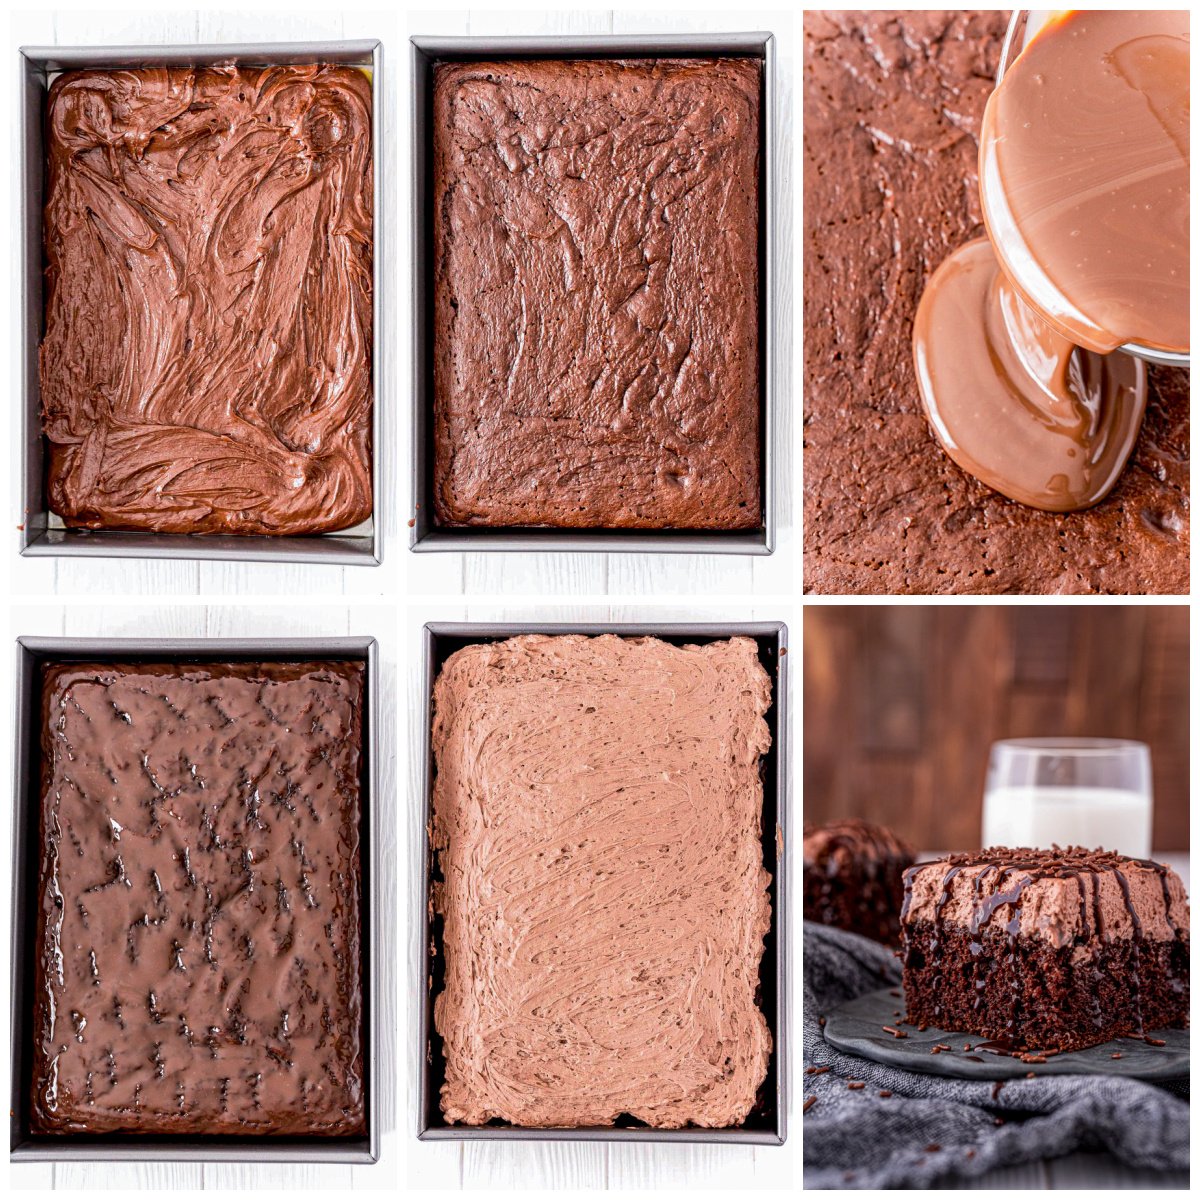 Step by step photos on how to make a Chocolate Poke Cake.